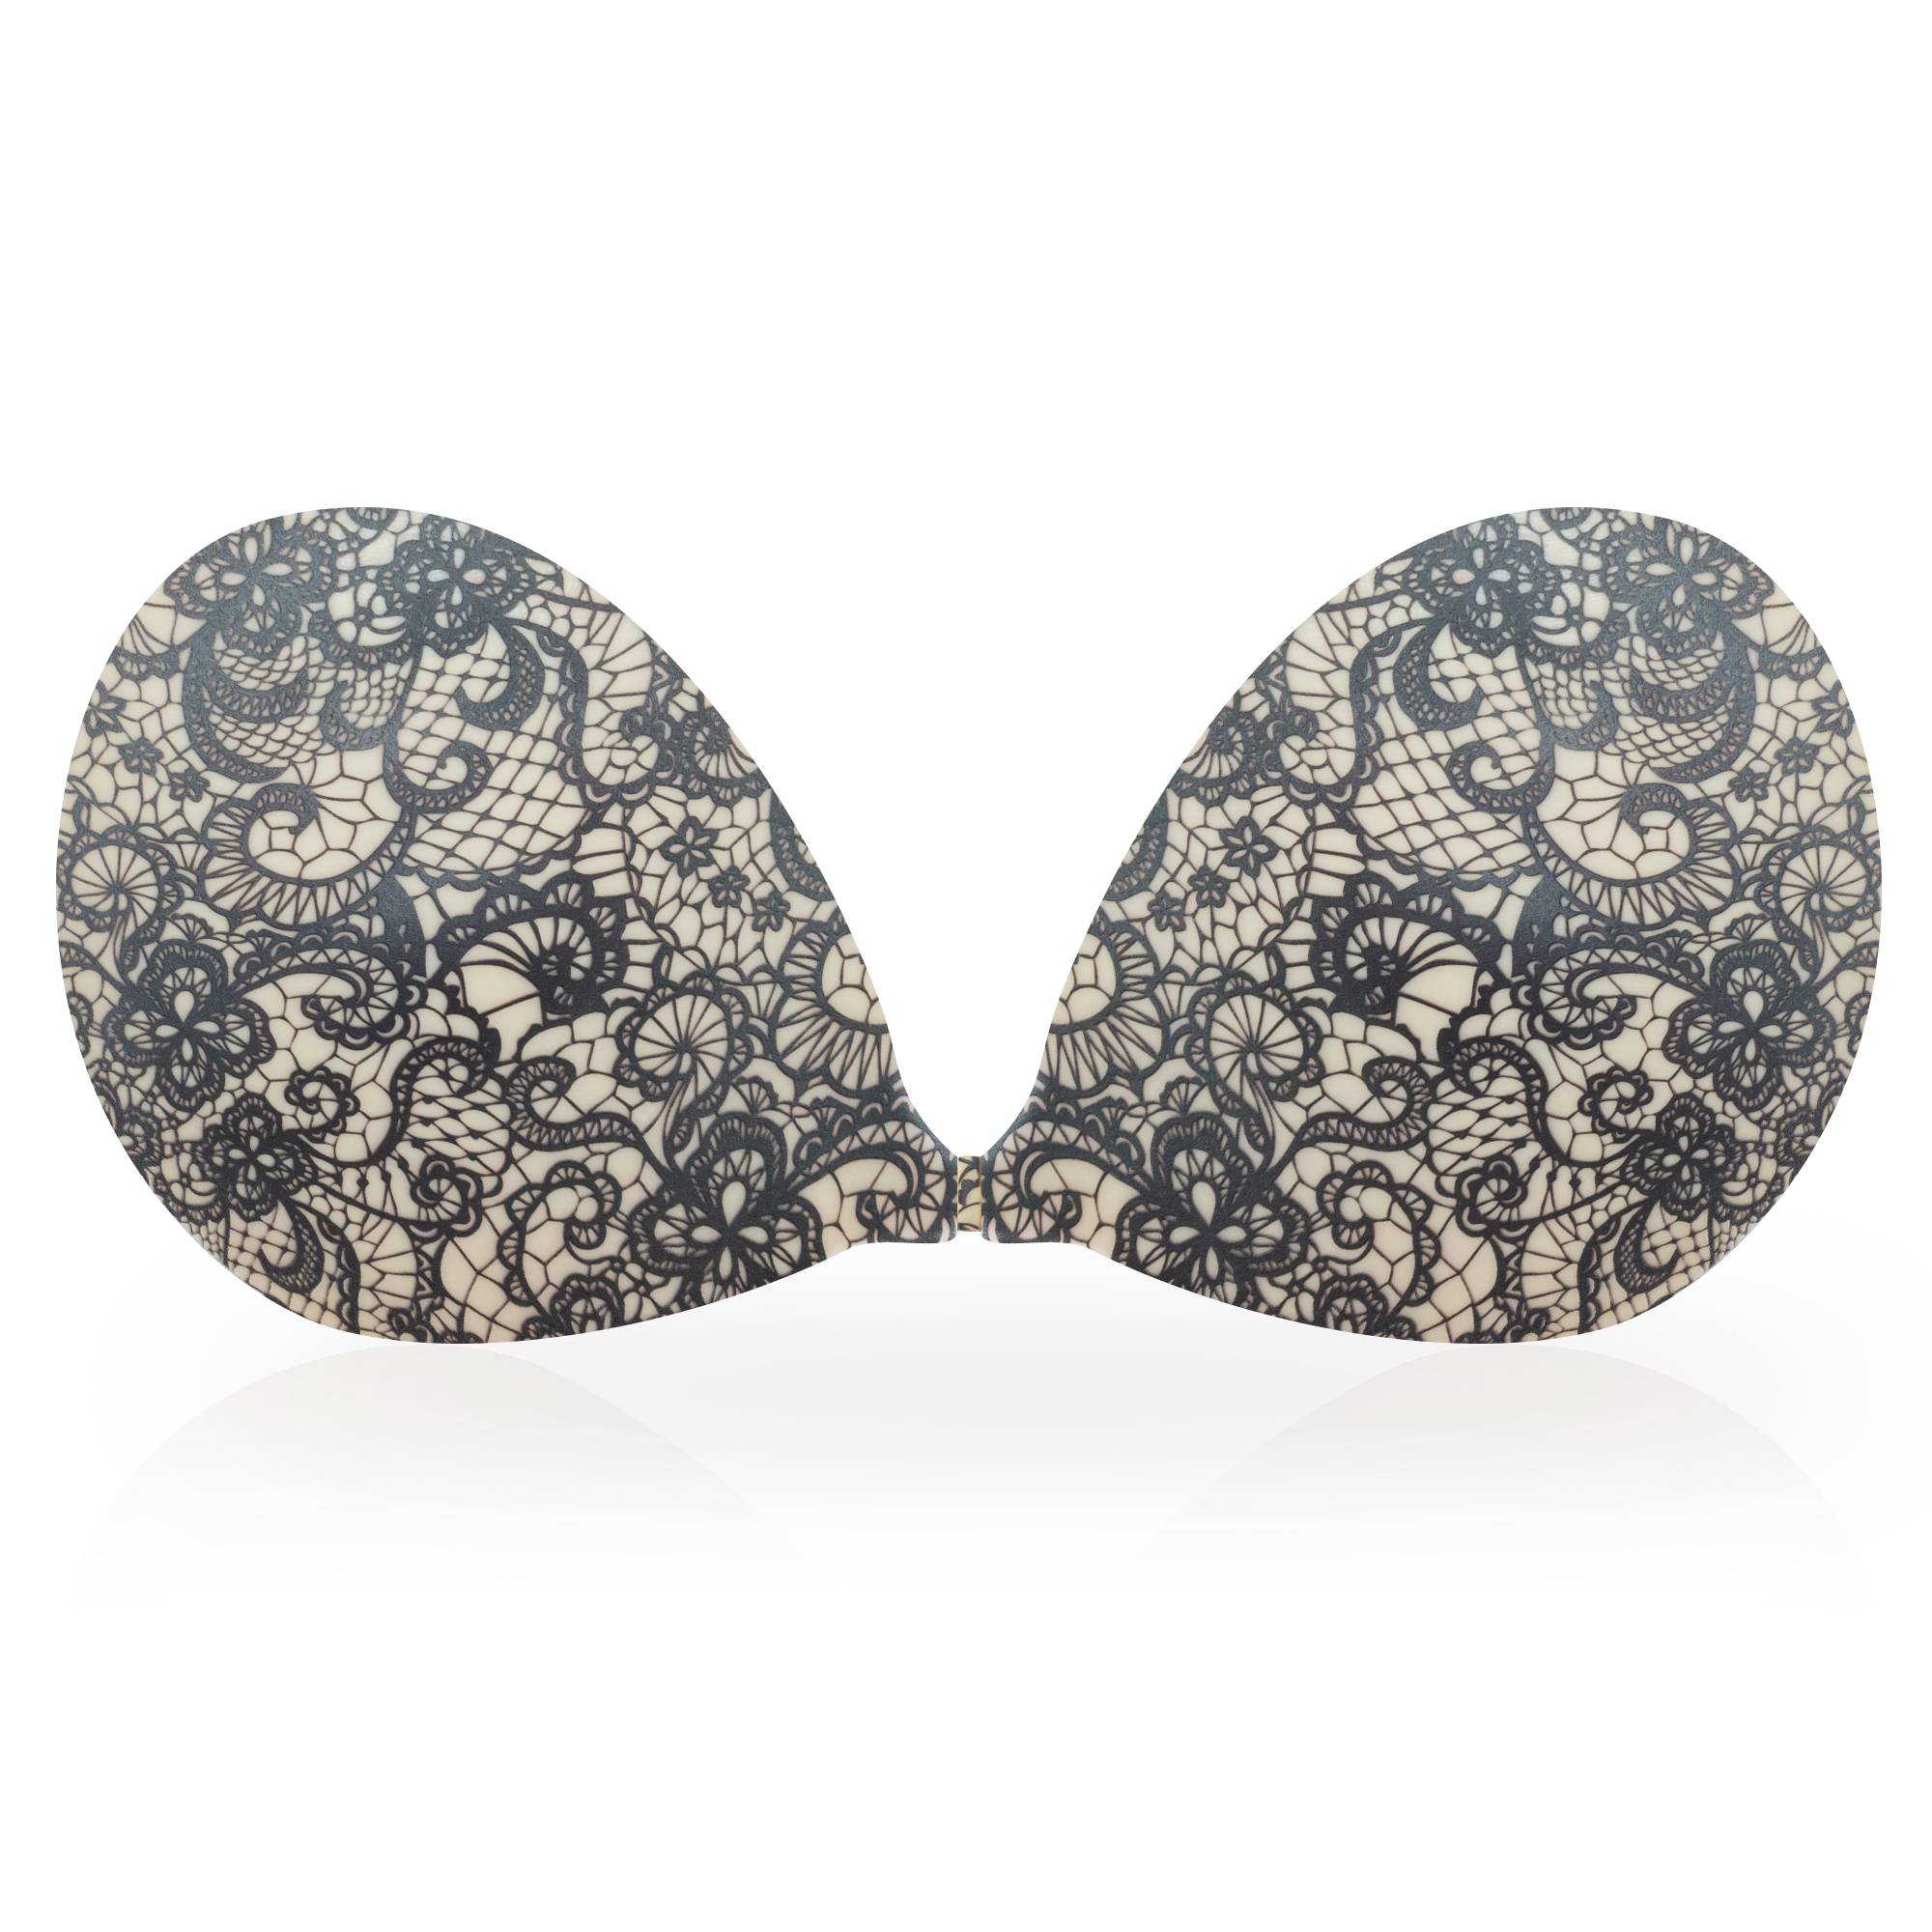 KISSBOBO Fashion Lace Embroidery Breast Sticker Strapless Underwear-9